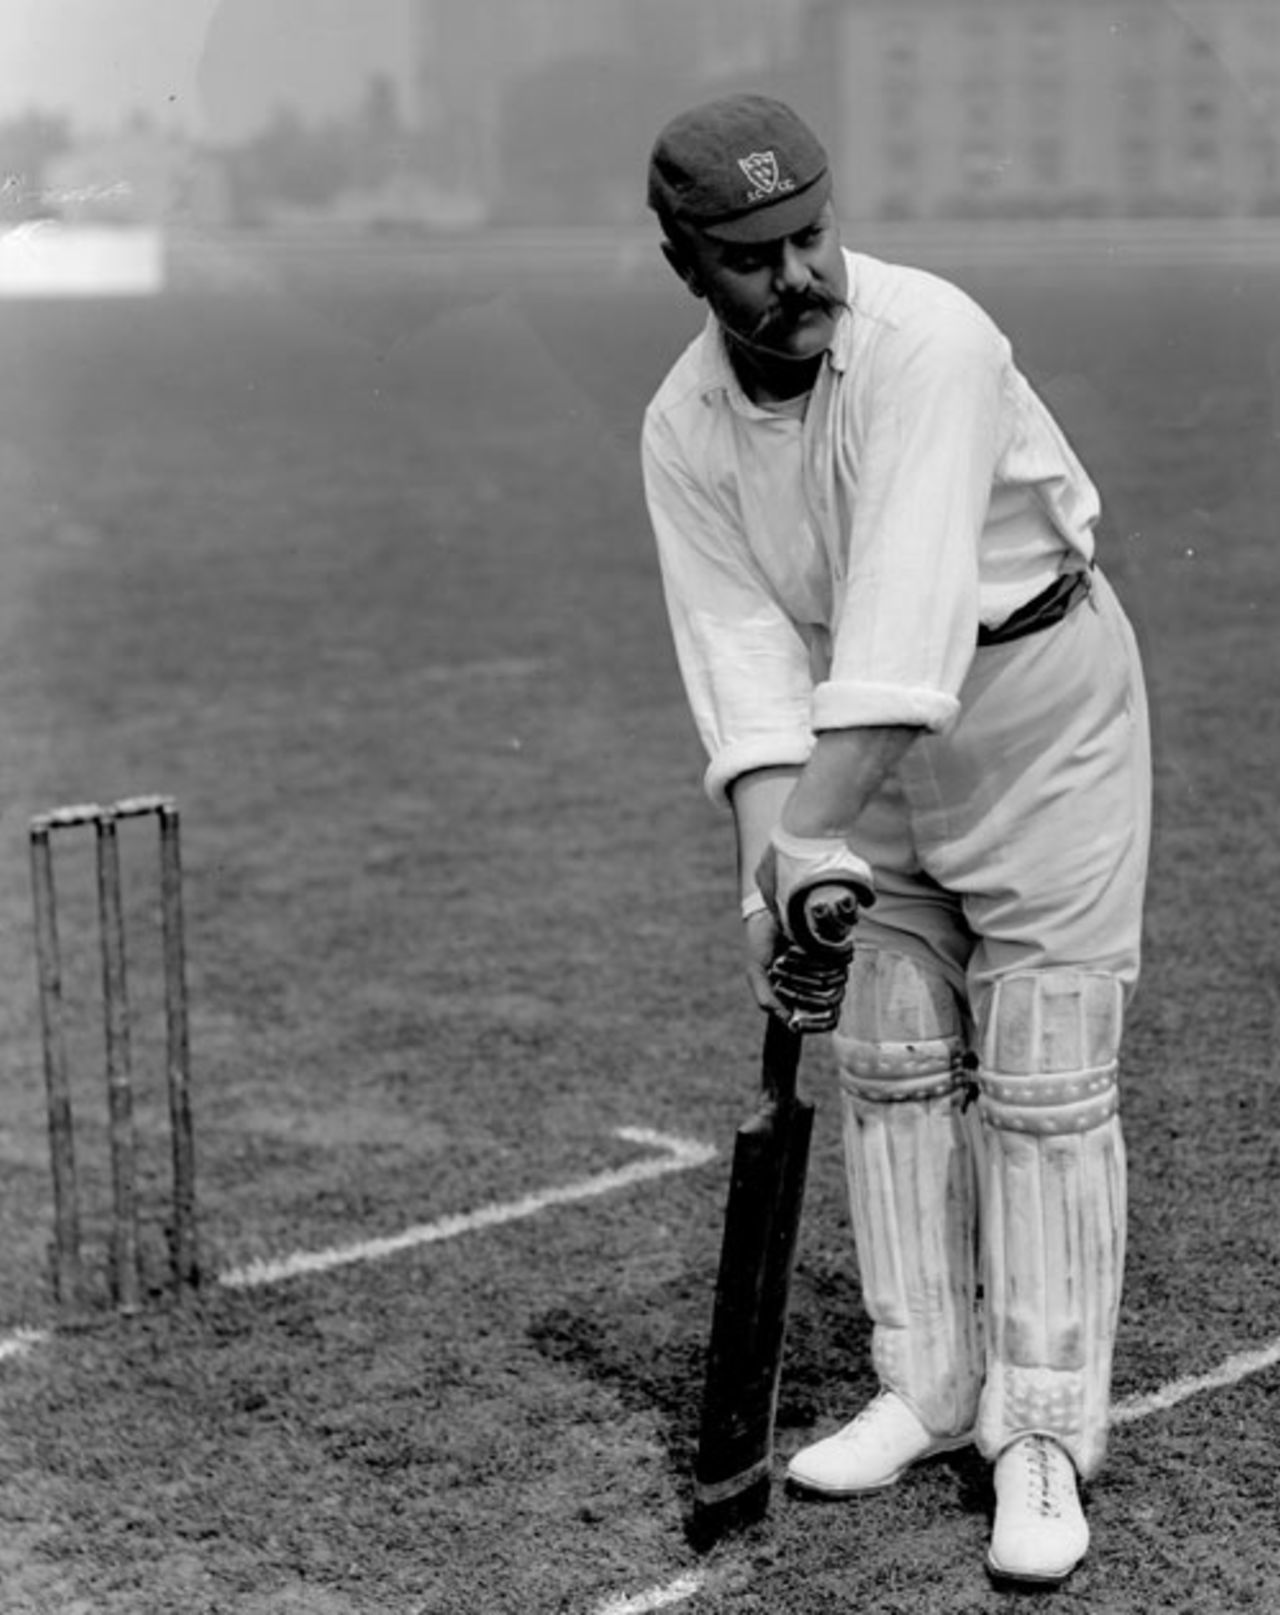 Australian cricketer Billy Murdoch circa 1895